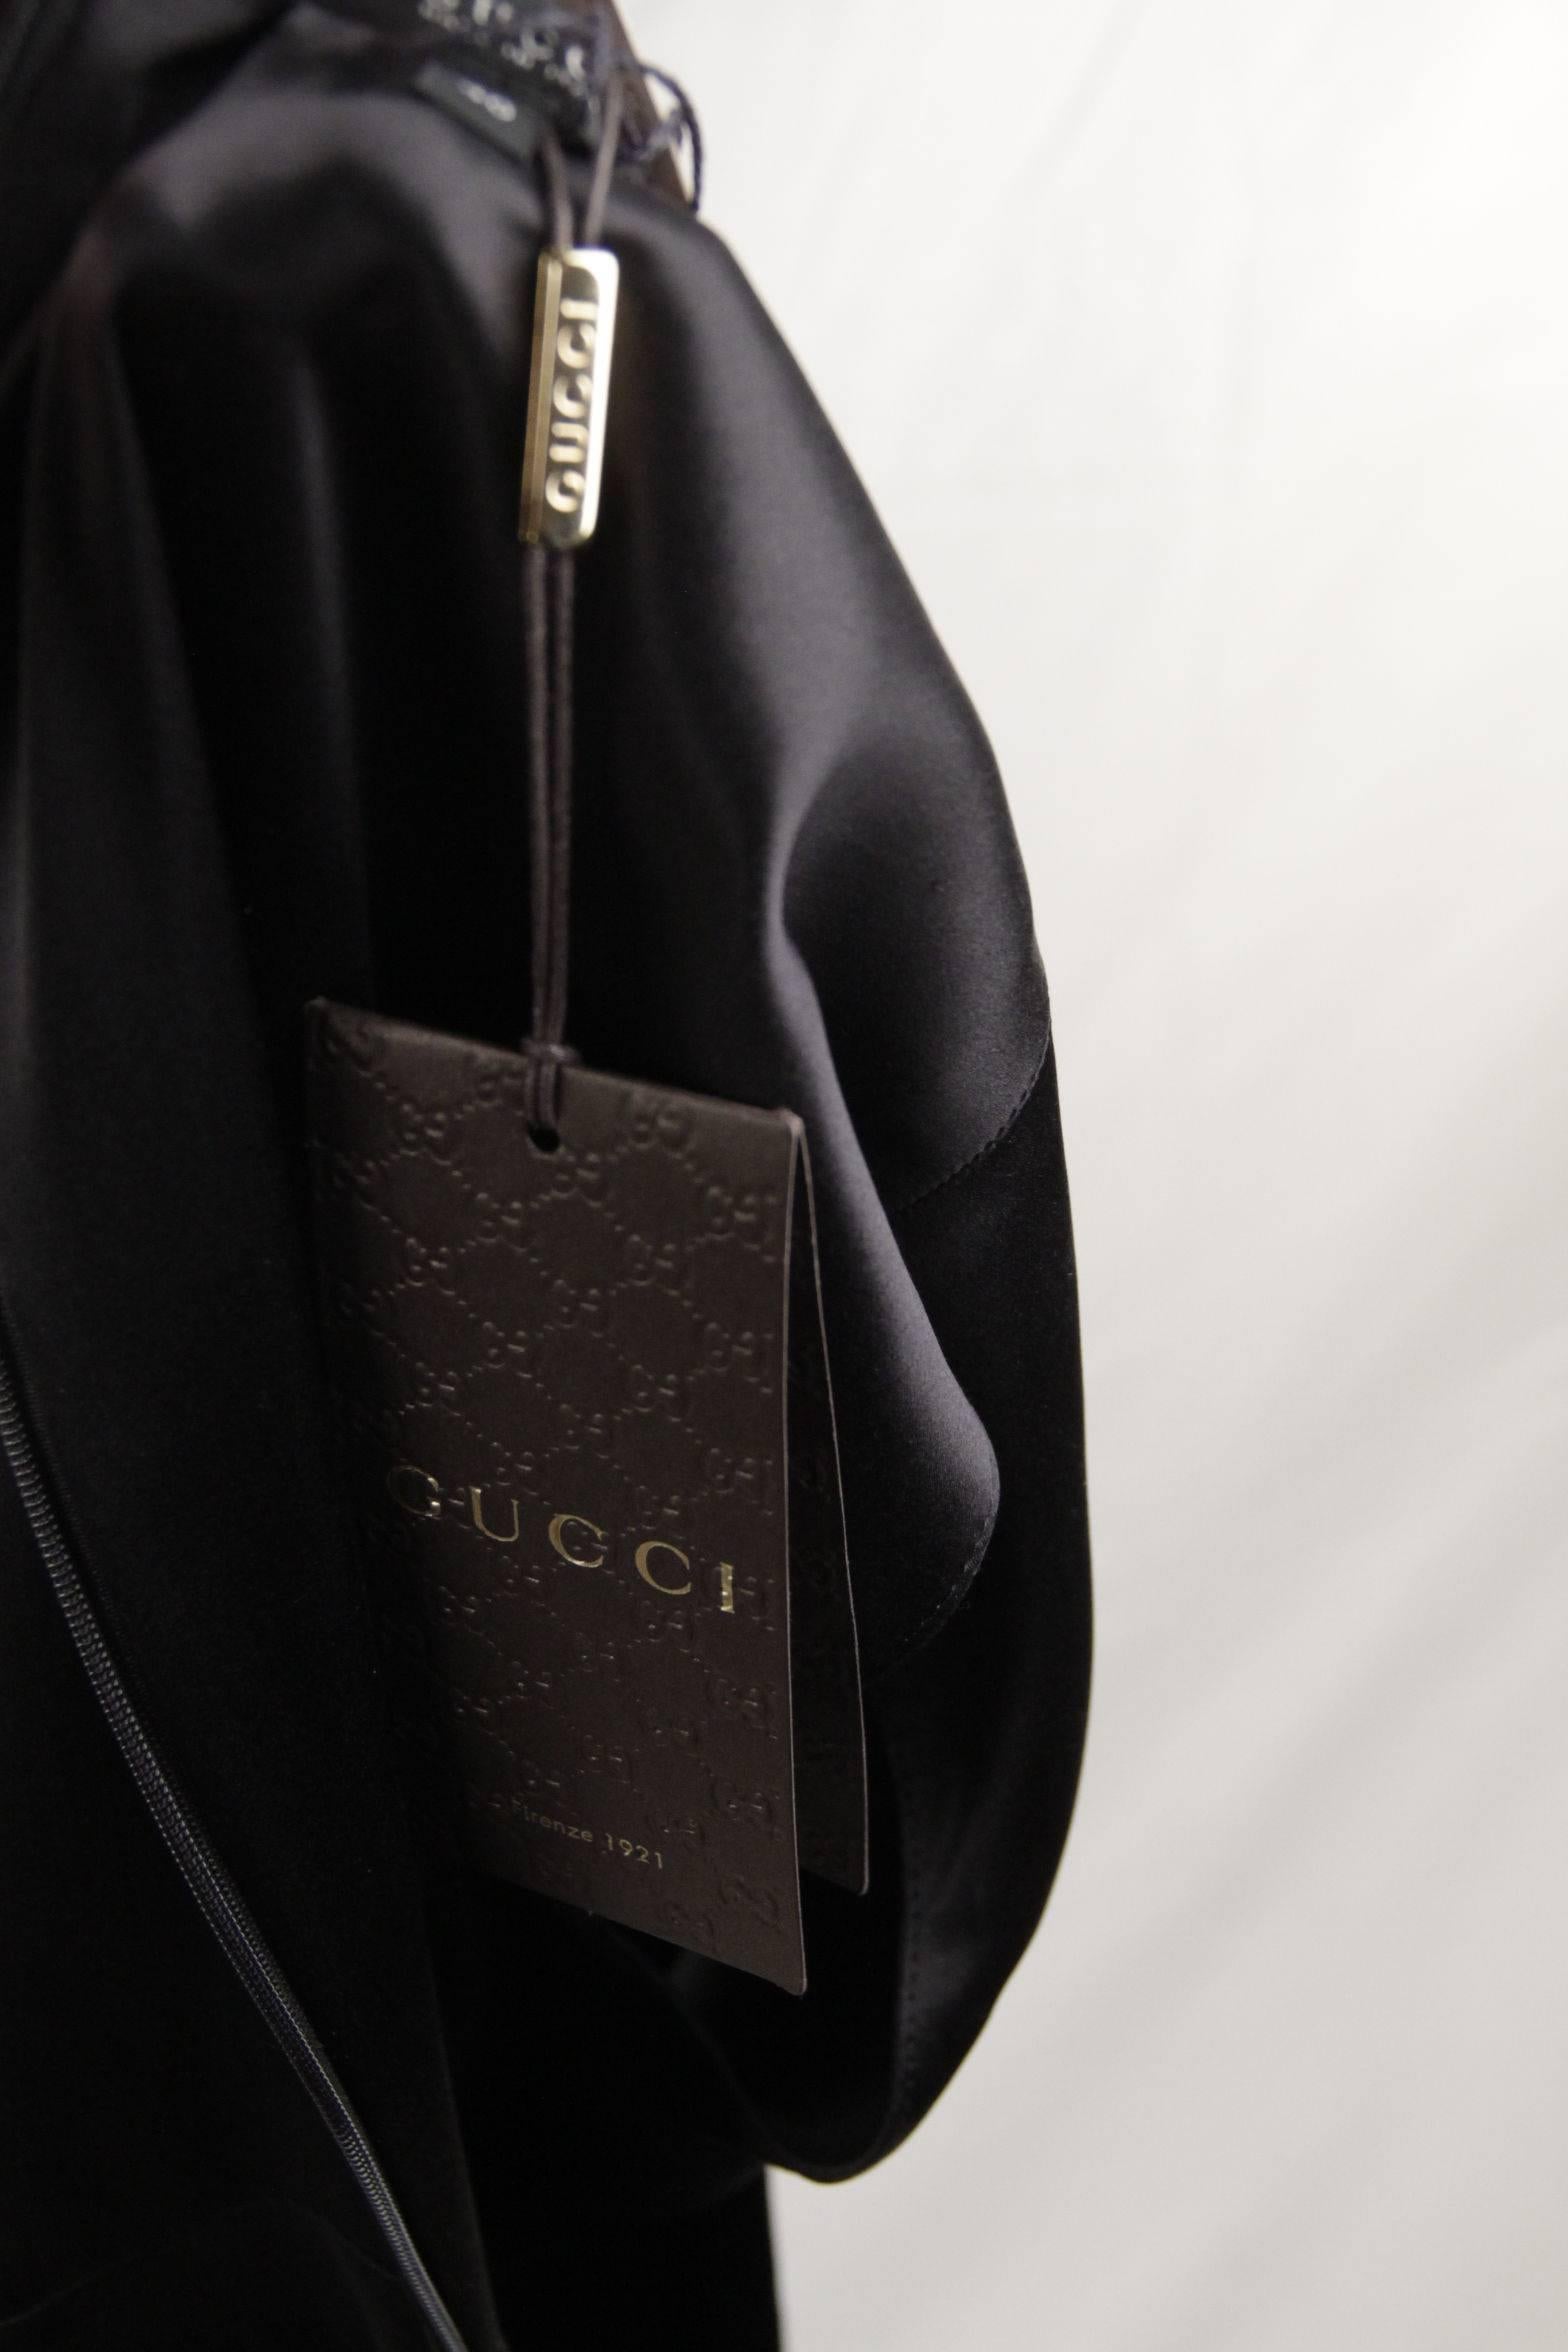 Women's GUCCI Silk LITTLE BLACK DRESS Wrap Front SIZE 40